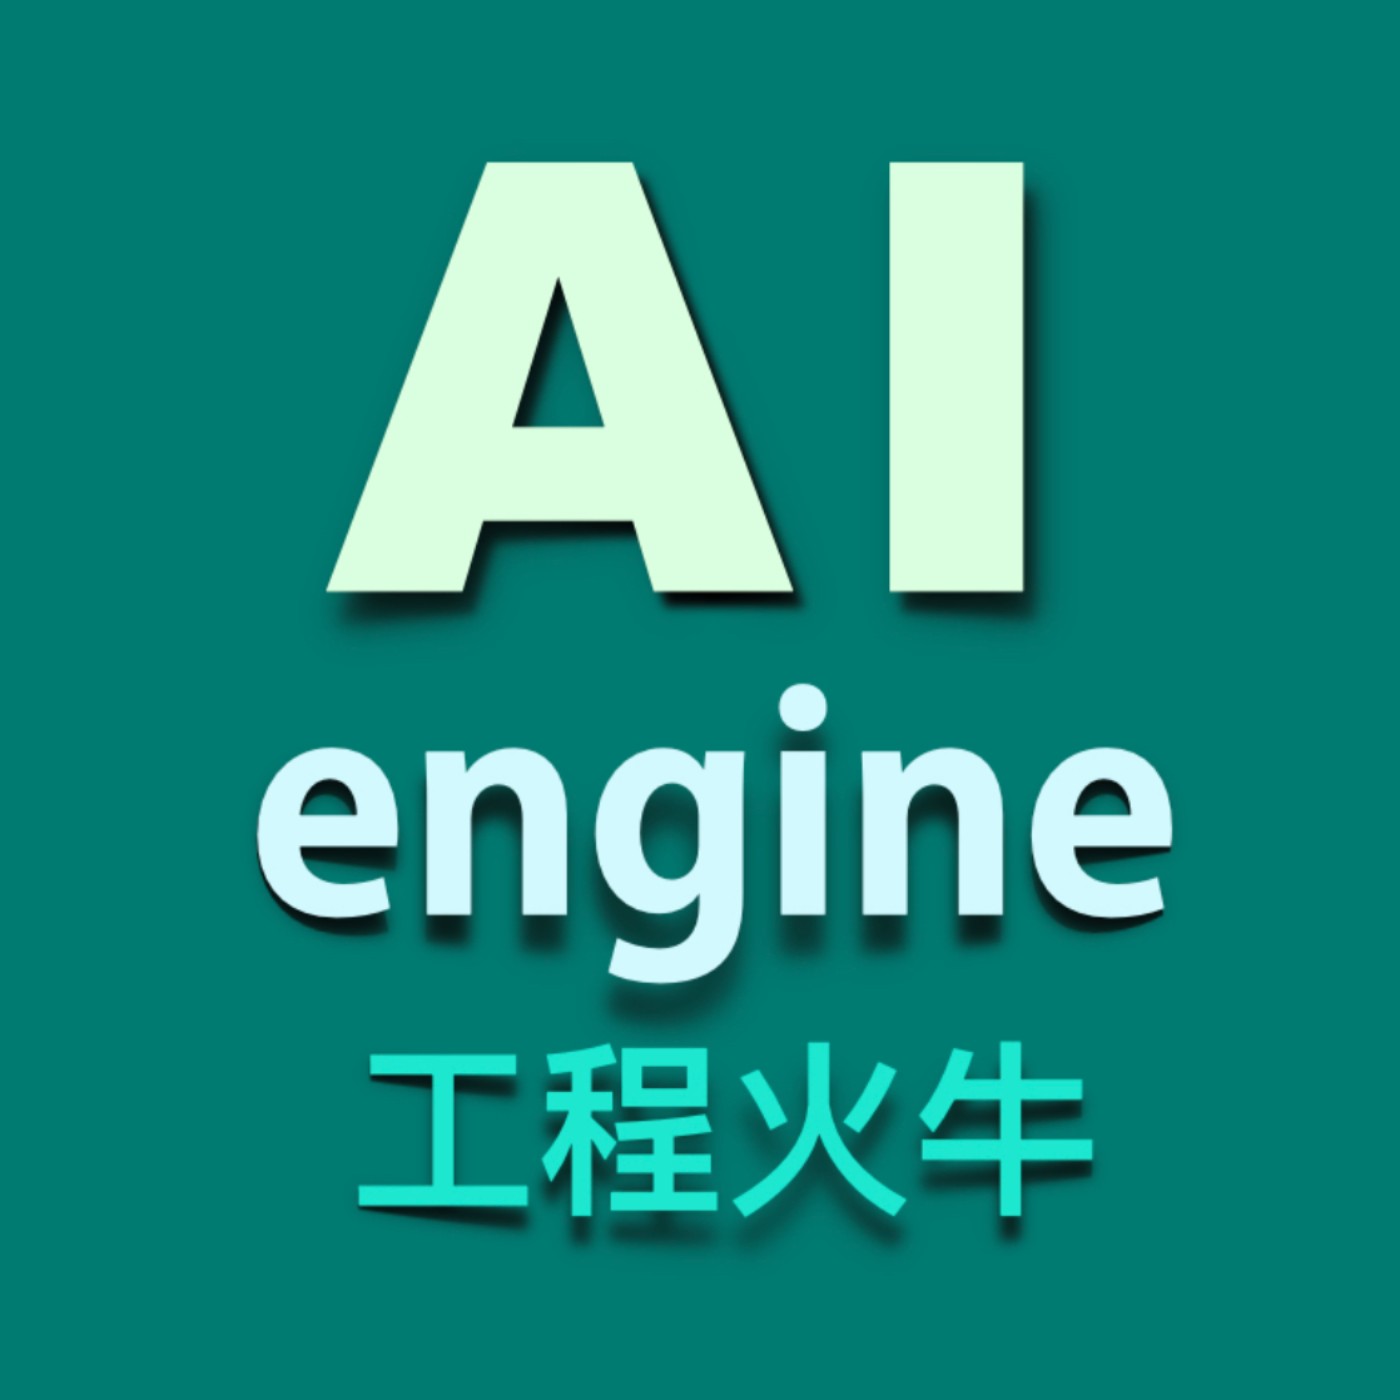 AI engine